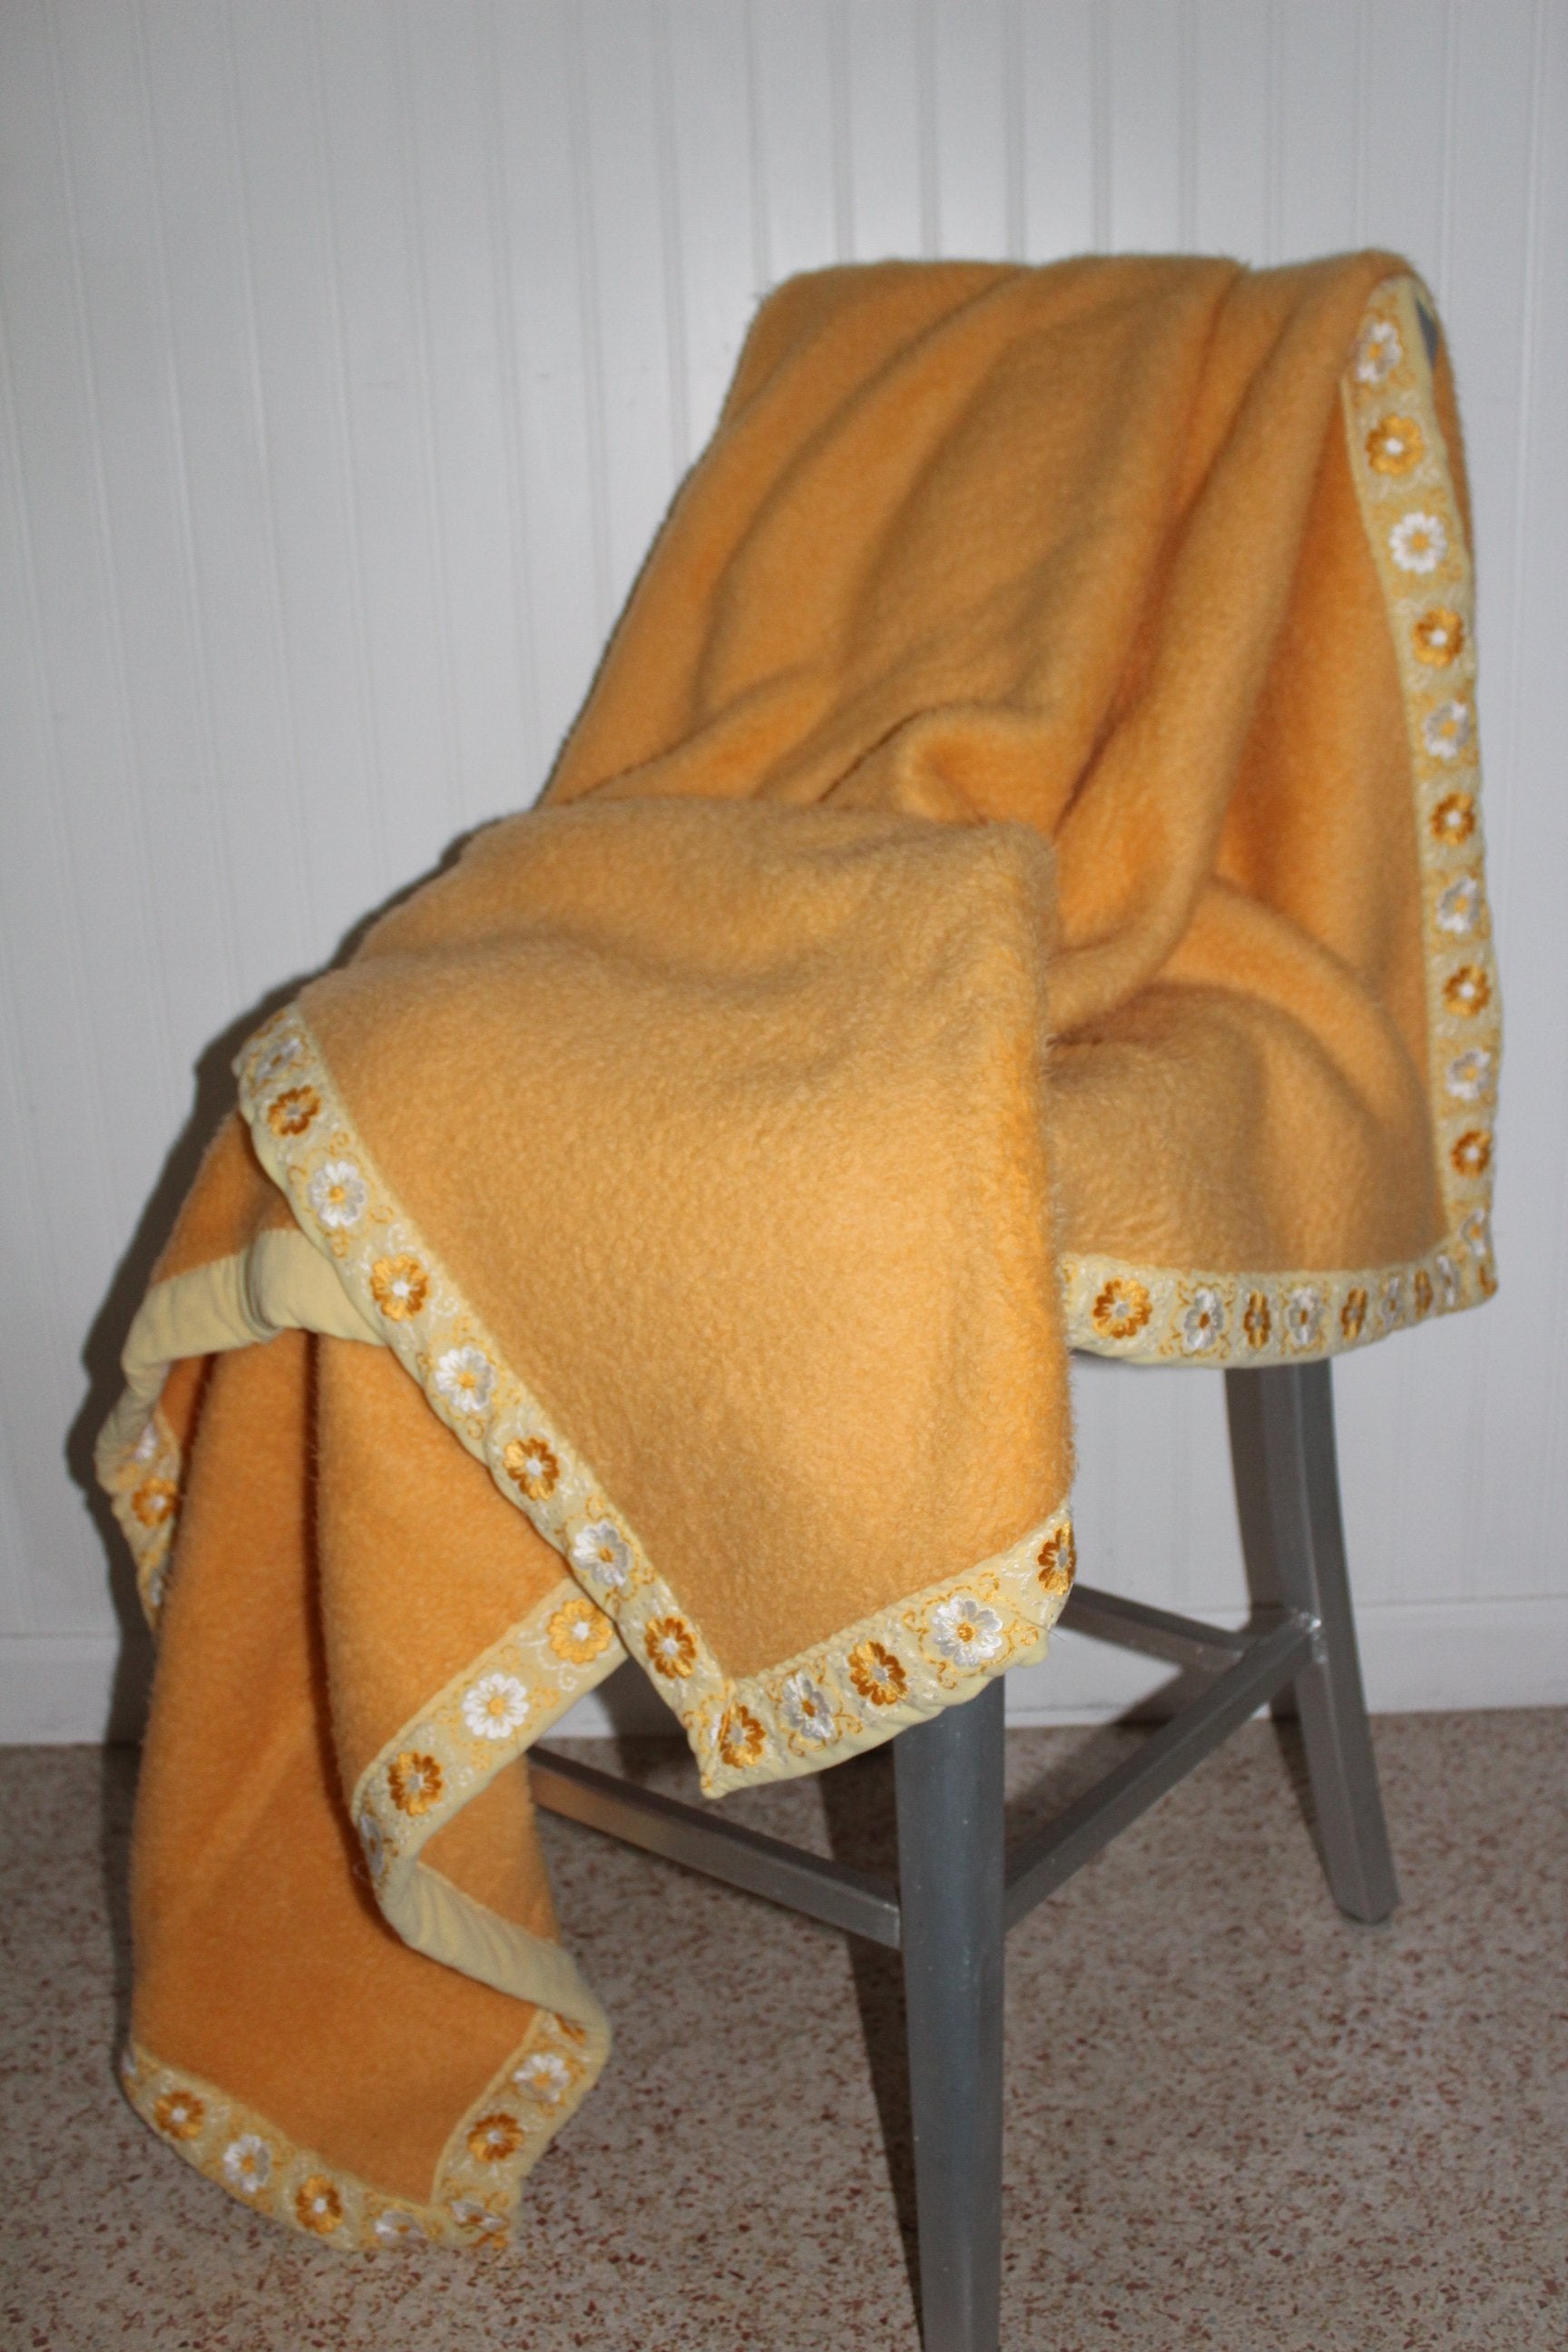 Heavy Small Blanket Butterscotch Fluffy High Nap Plush Decorative Binding crib blanket